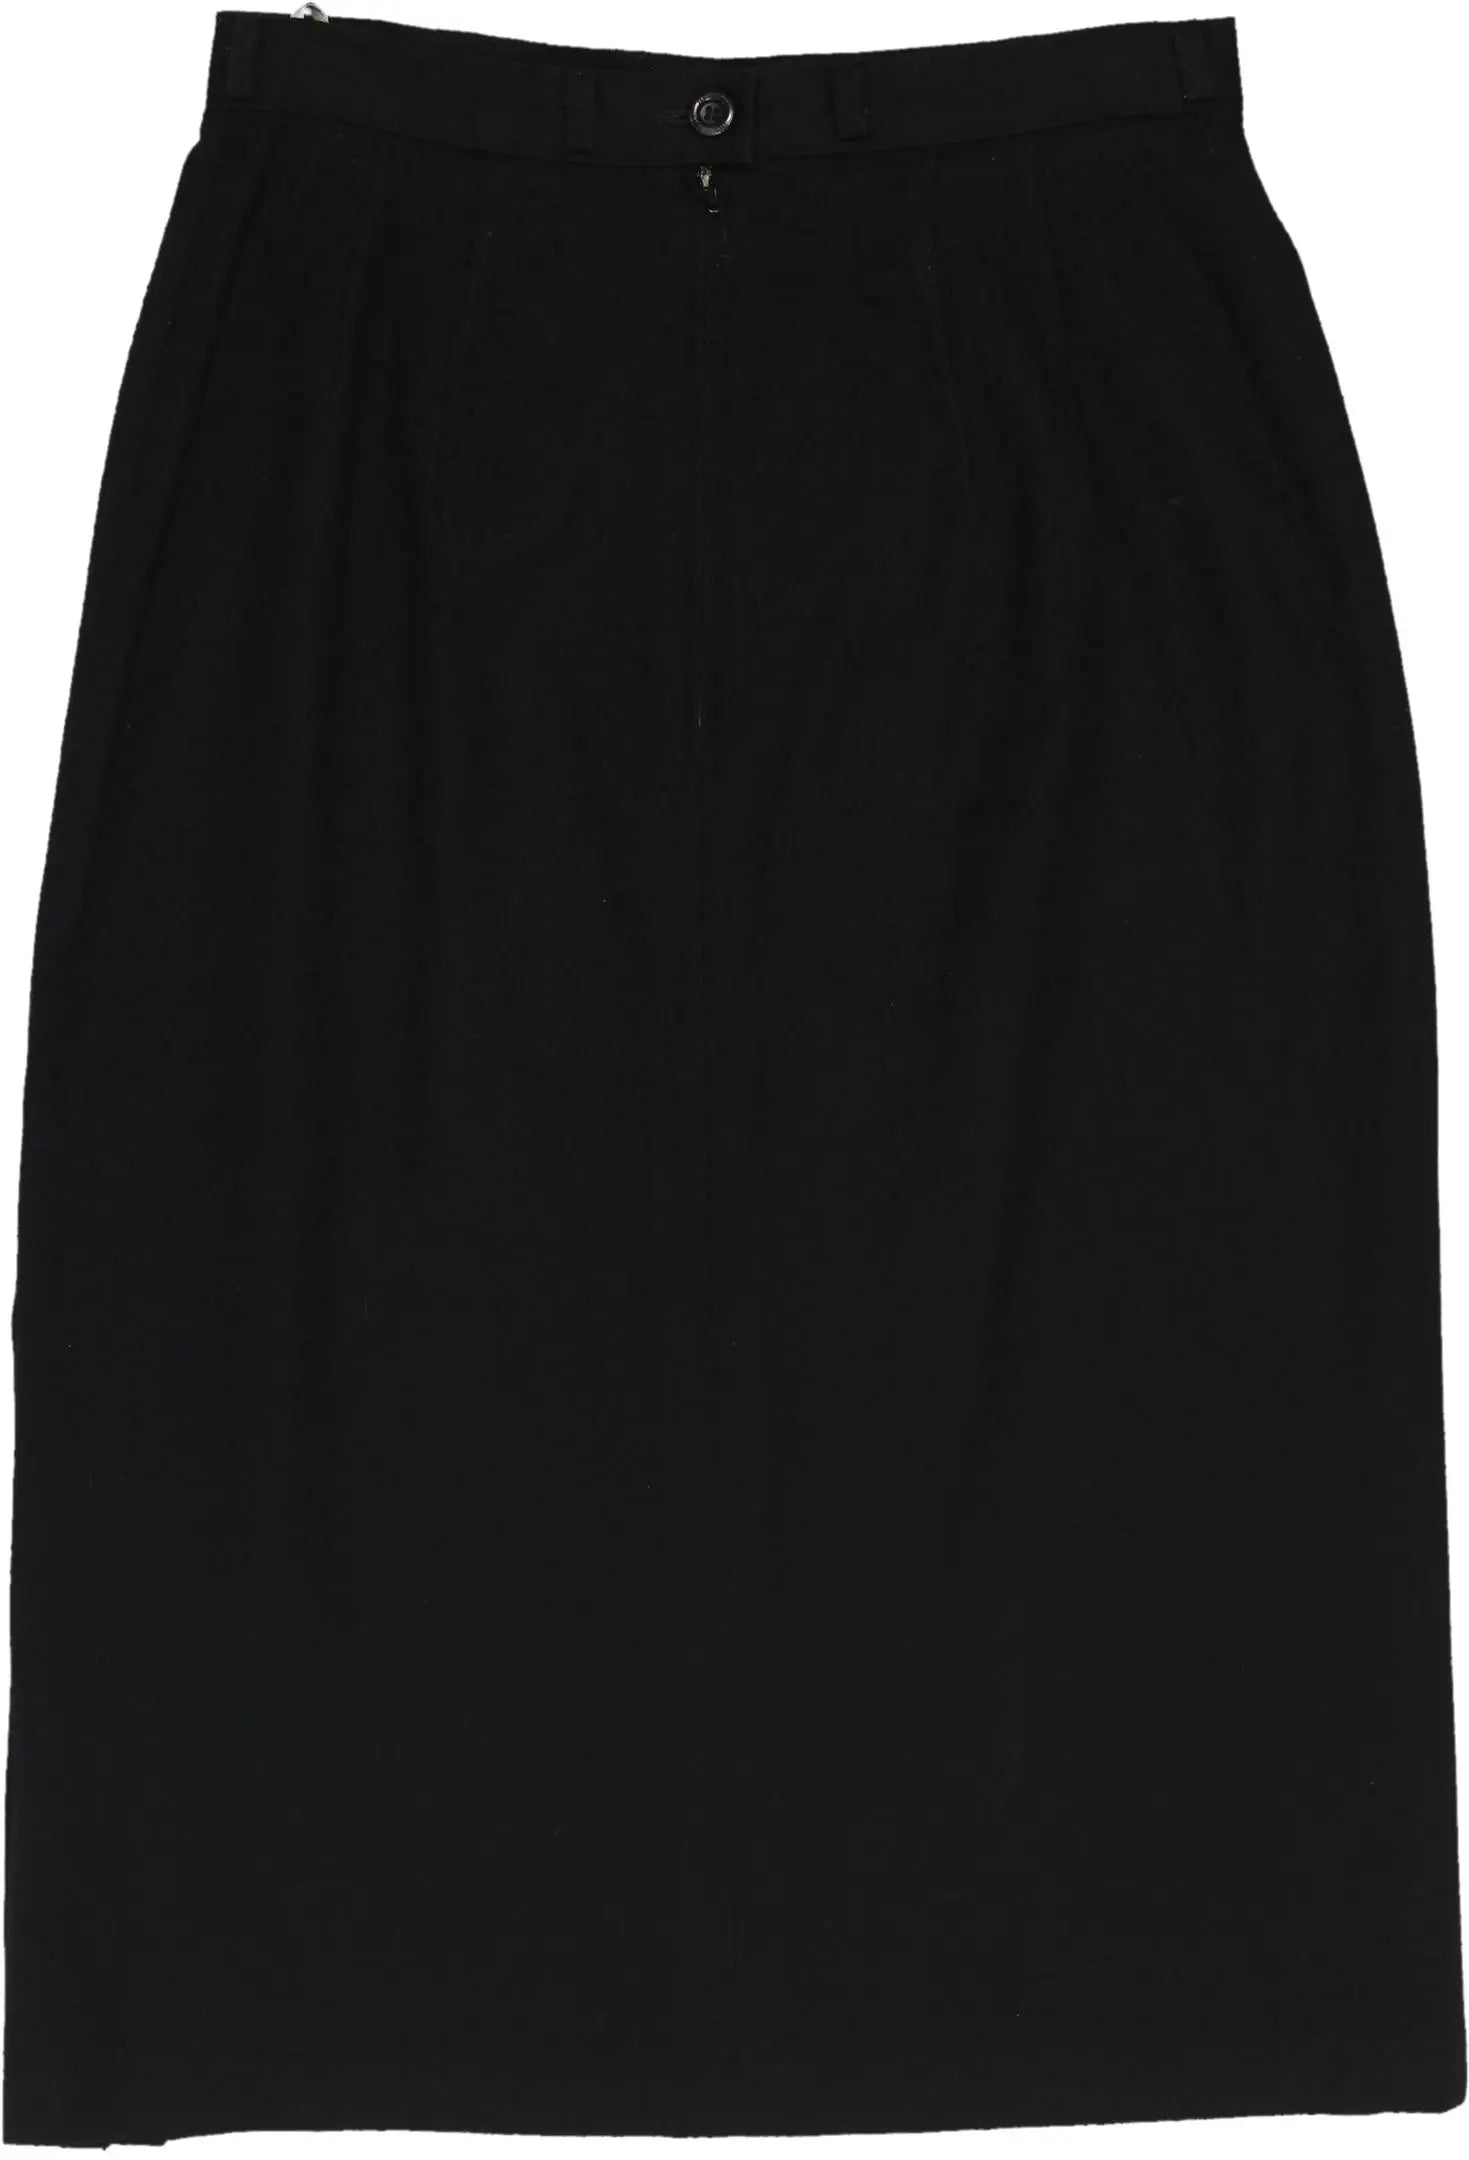 Kreymborg - Black maxi skirt- ThriftTale.com - Vintage and second handclothing